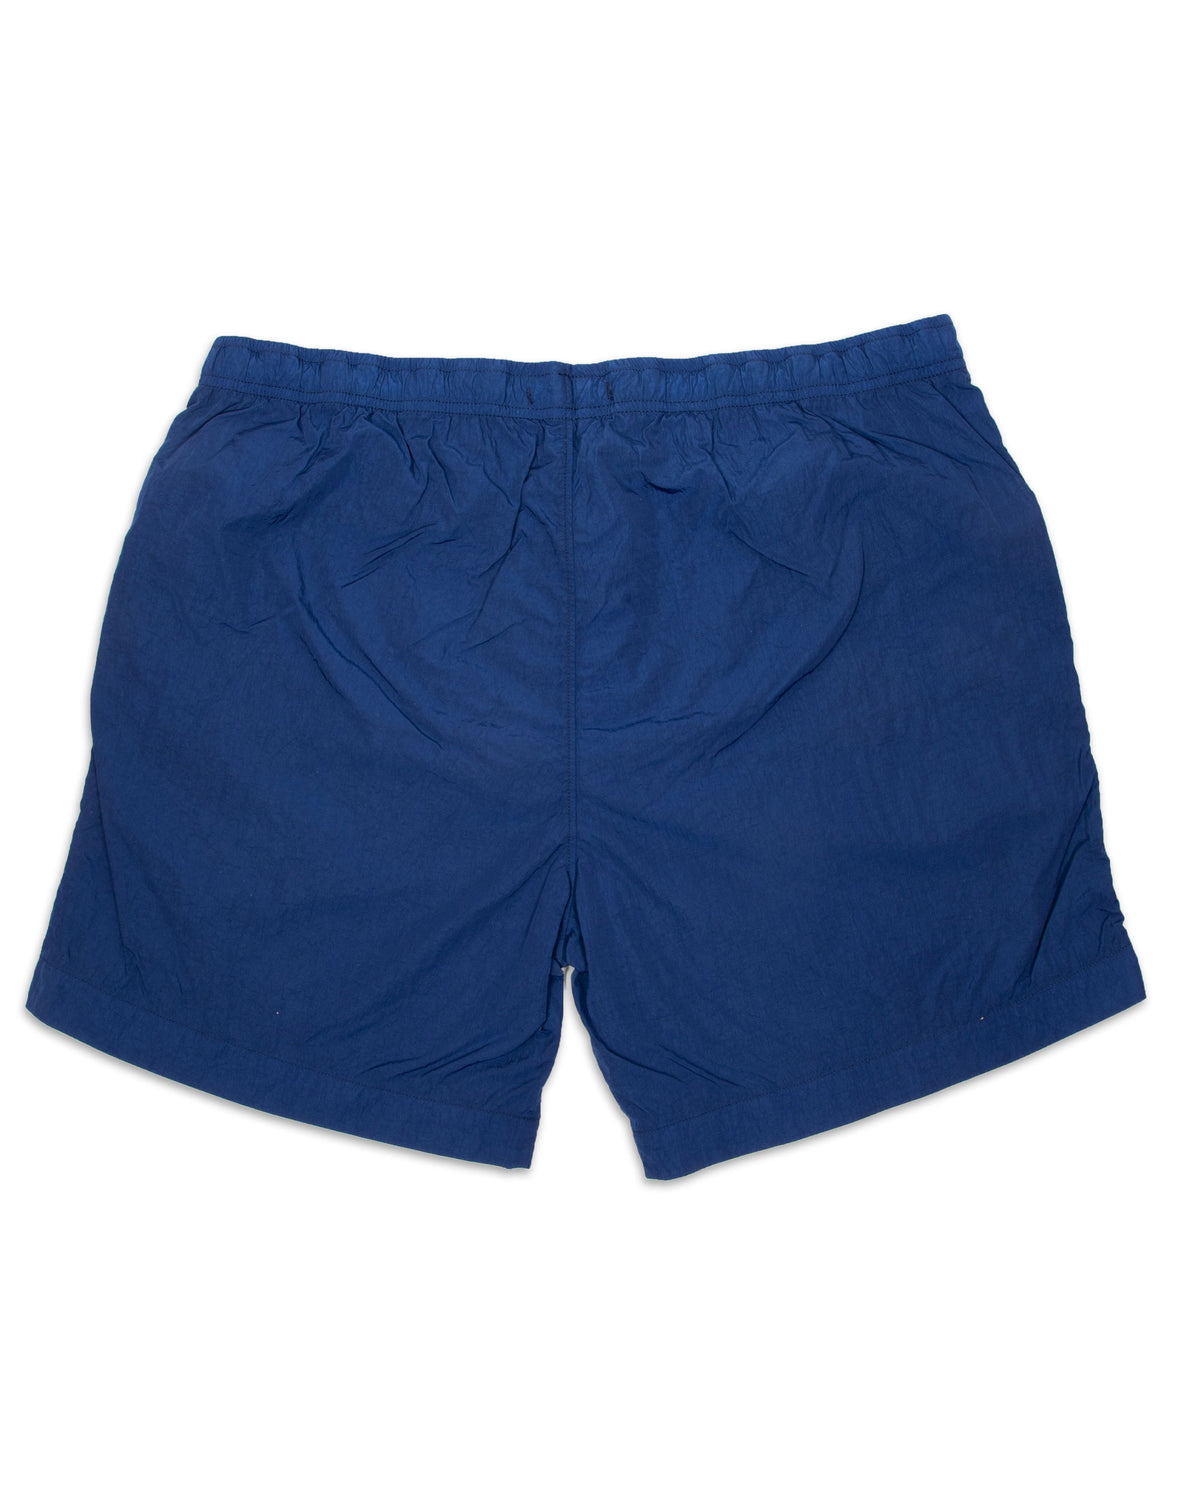 Swim Short CP Company Beachwear Chrome Blue